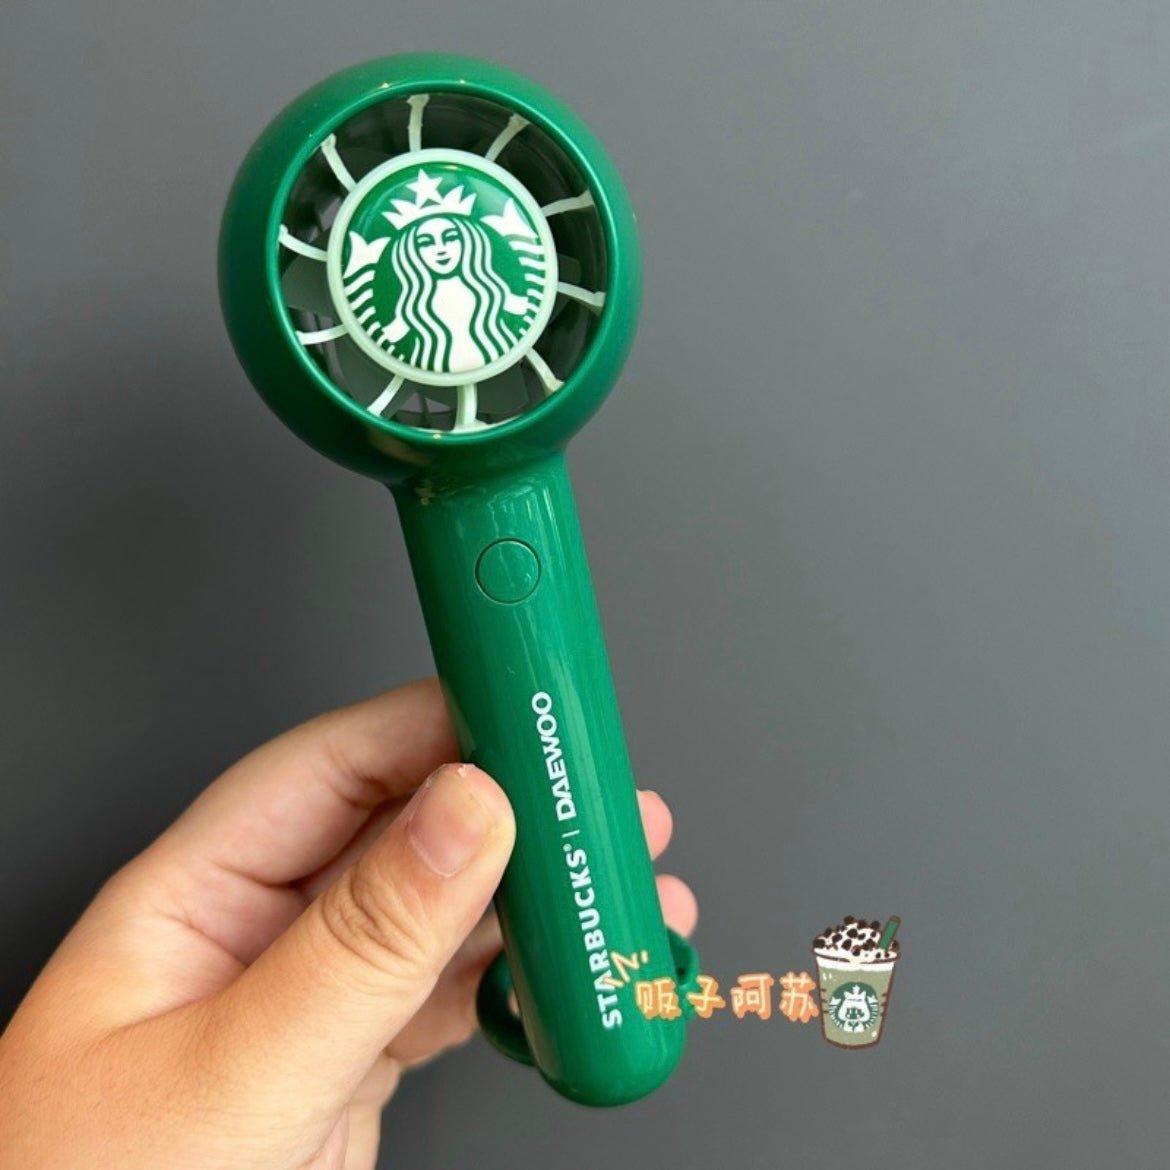 DAEWOO x Starbucks Mini Fan (2023 China Starbucks Collection) - Ann Ann Starbucks